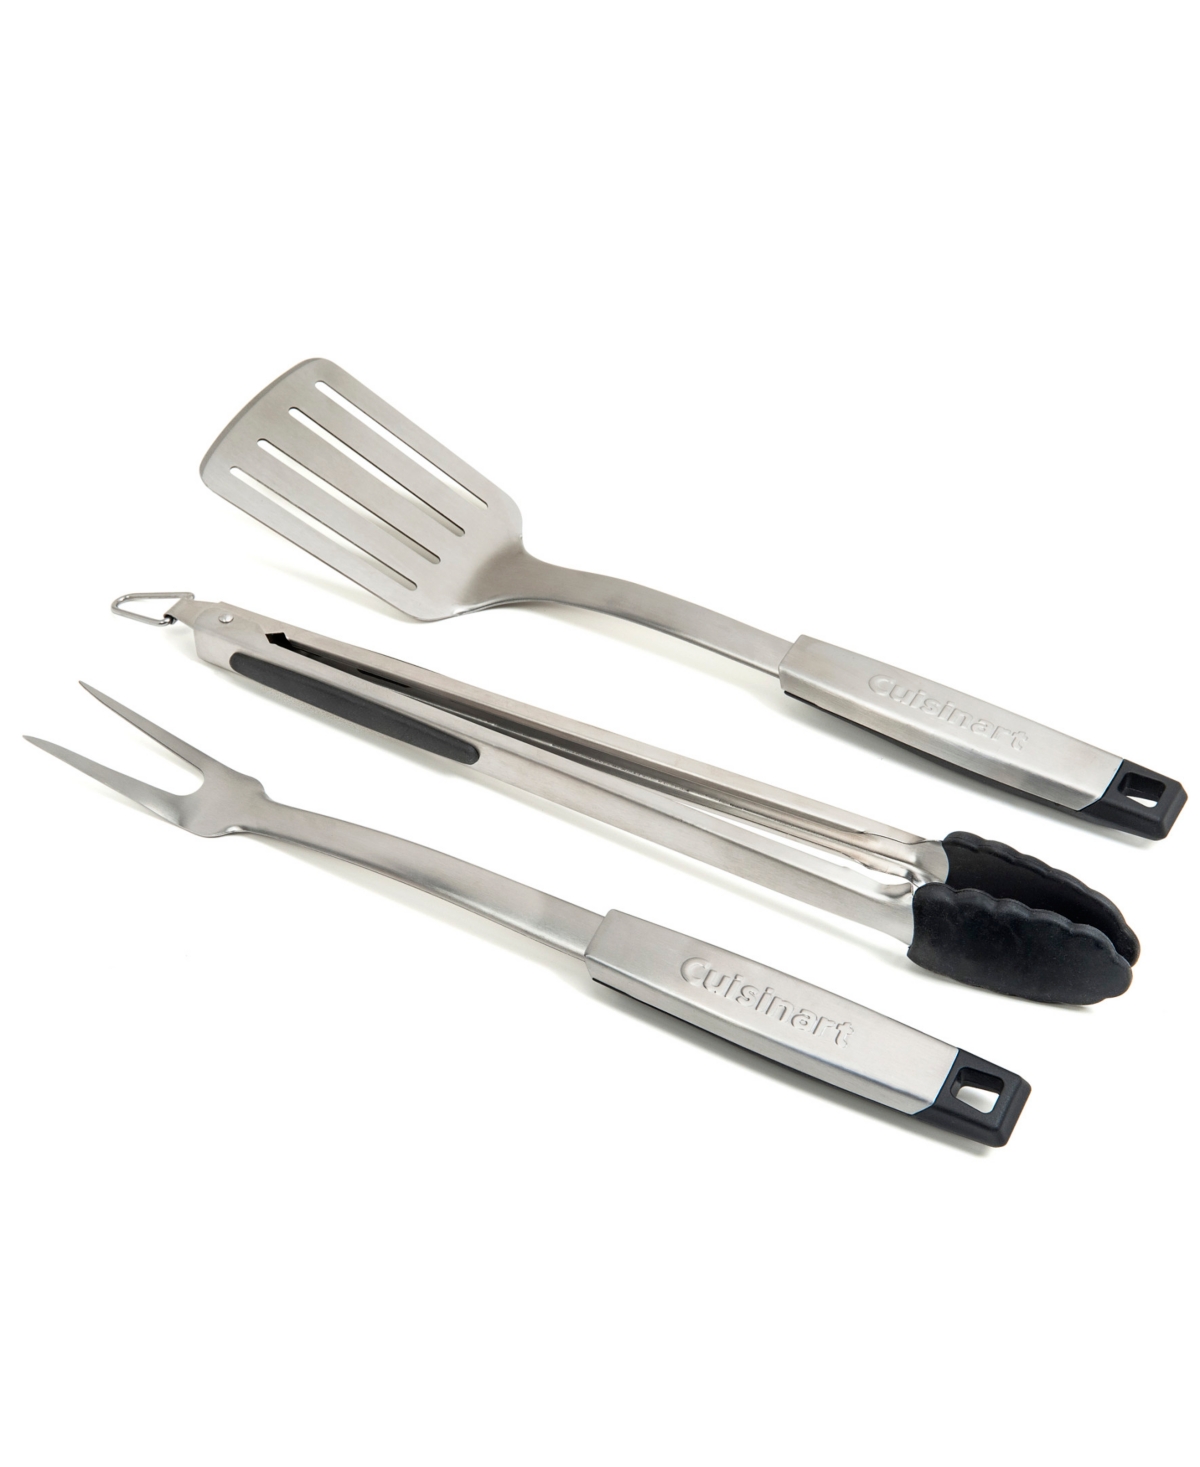 Cuisinart Professional Grill Tool Set 3-piece In Metallic